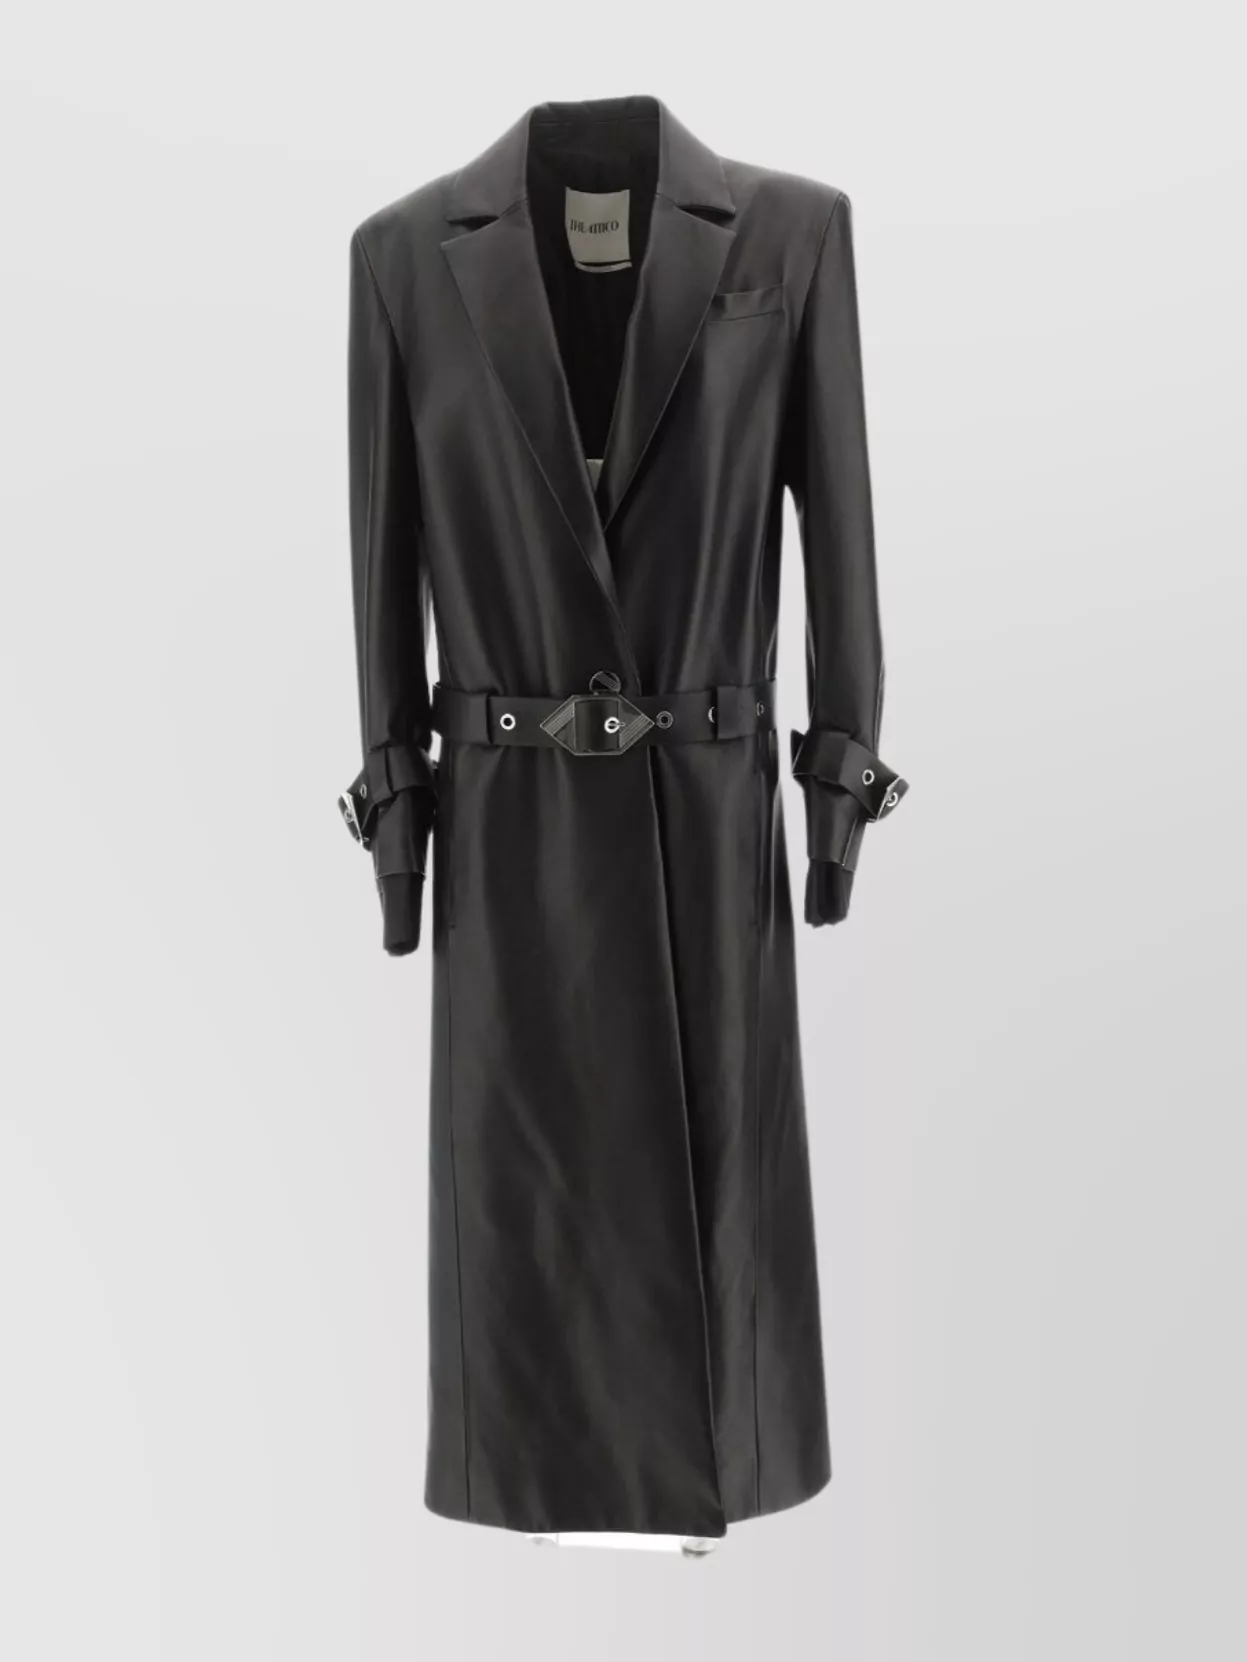 Attico Leather Coat With Buckle Strap Cuffs In Black